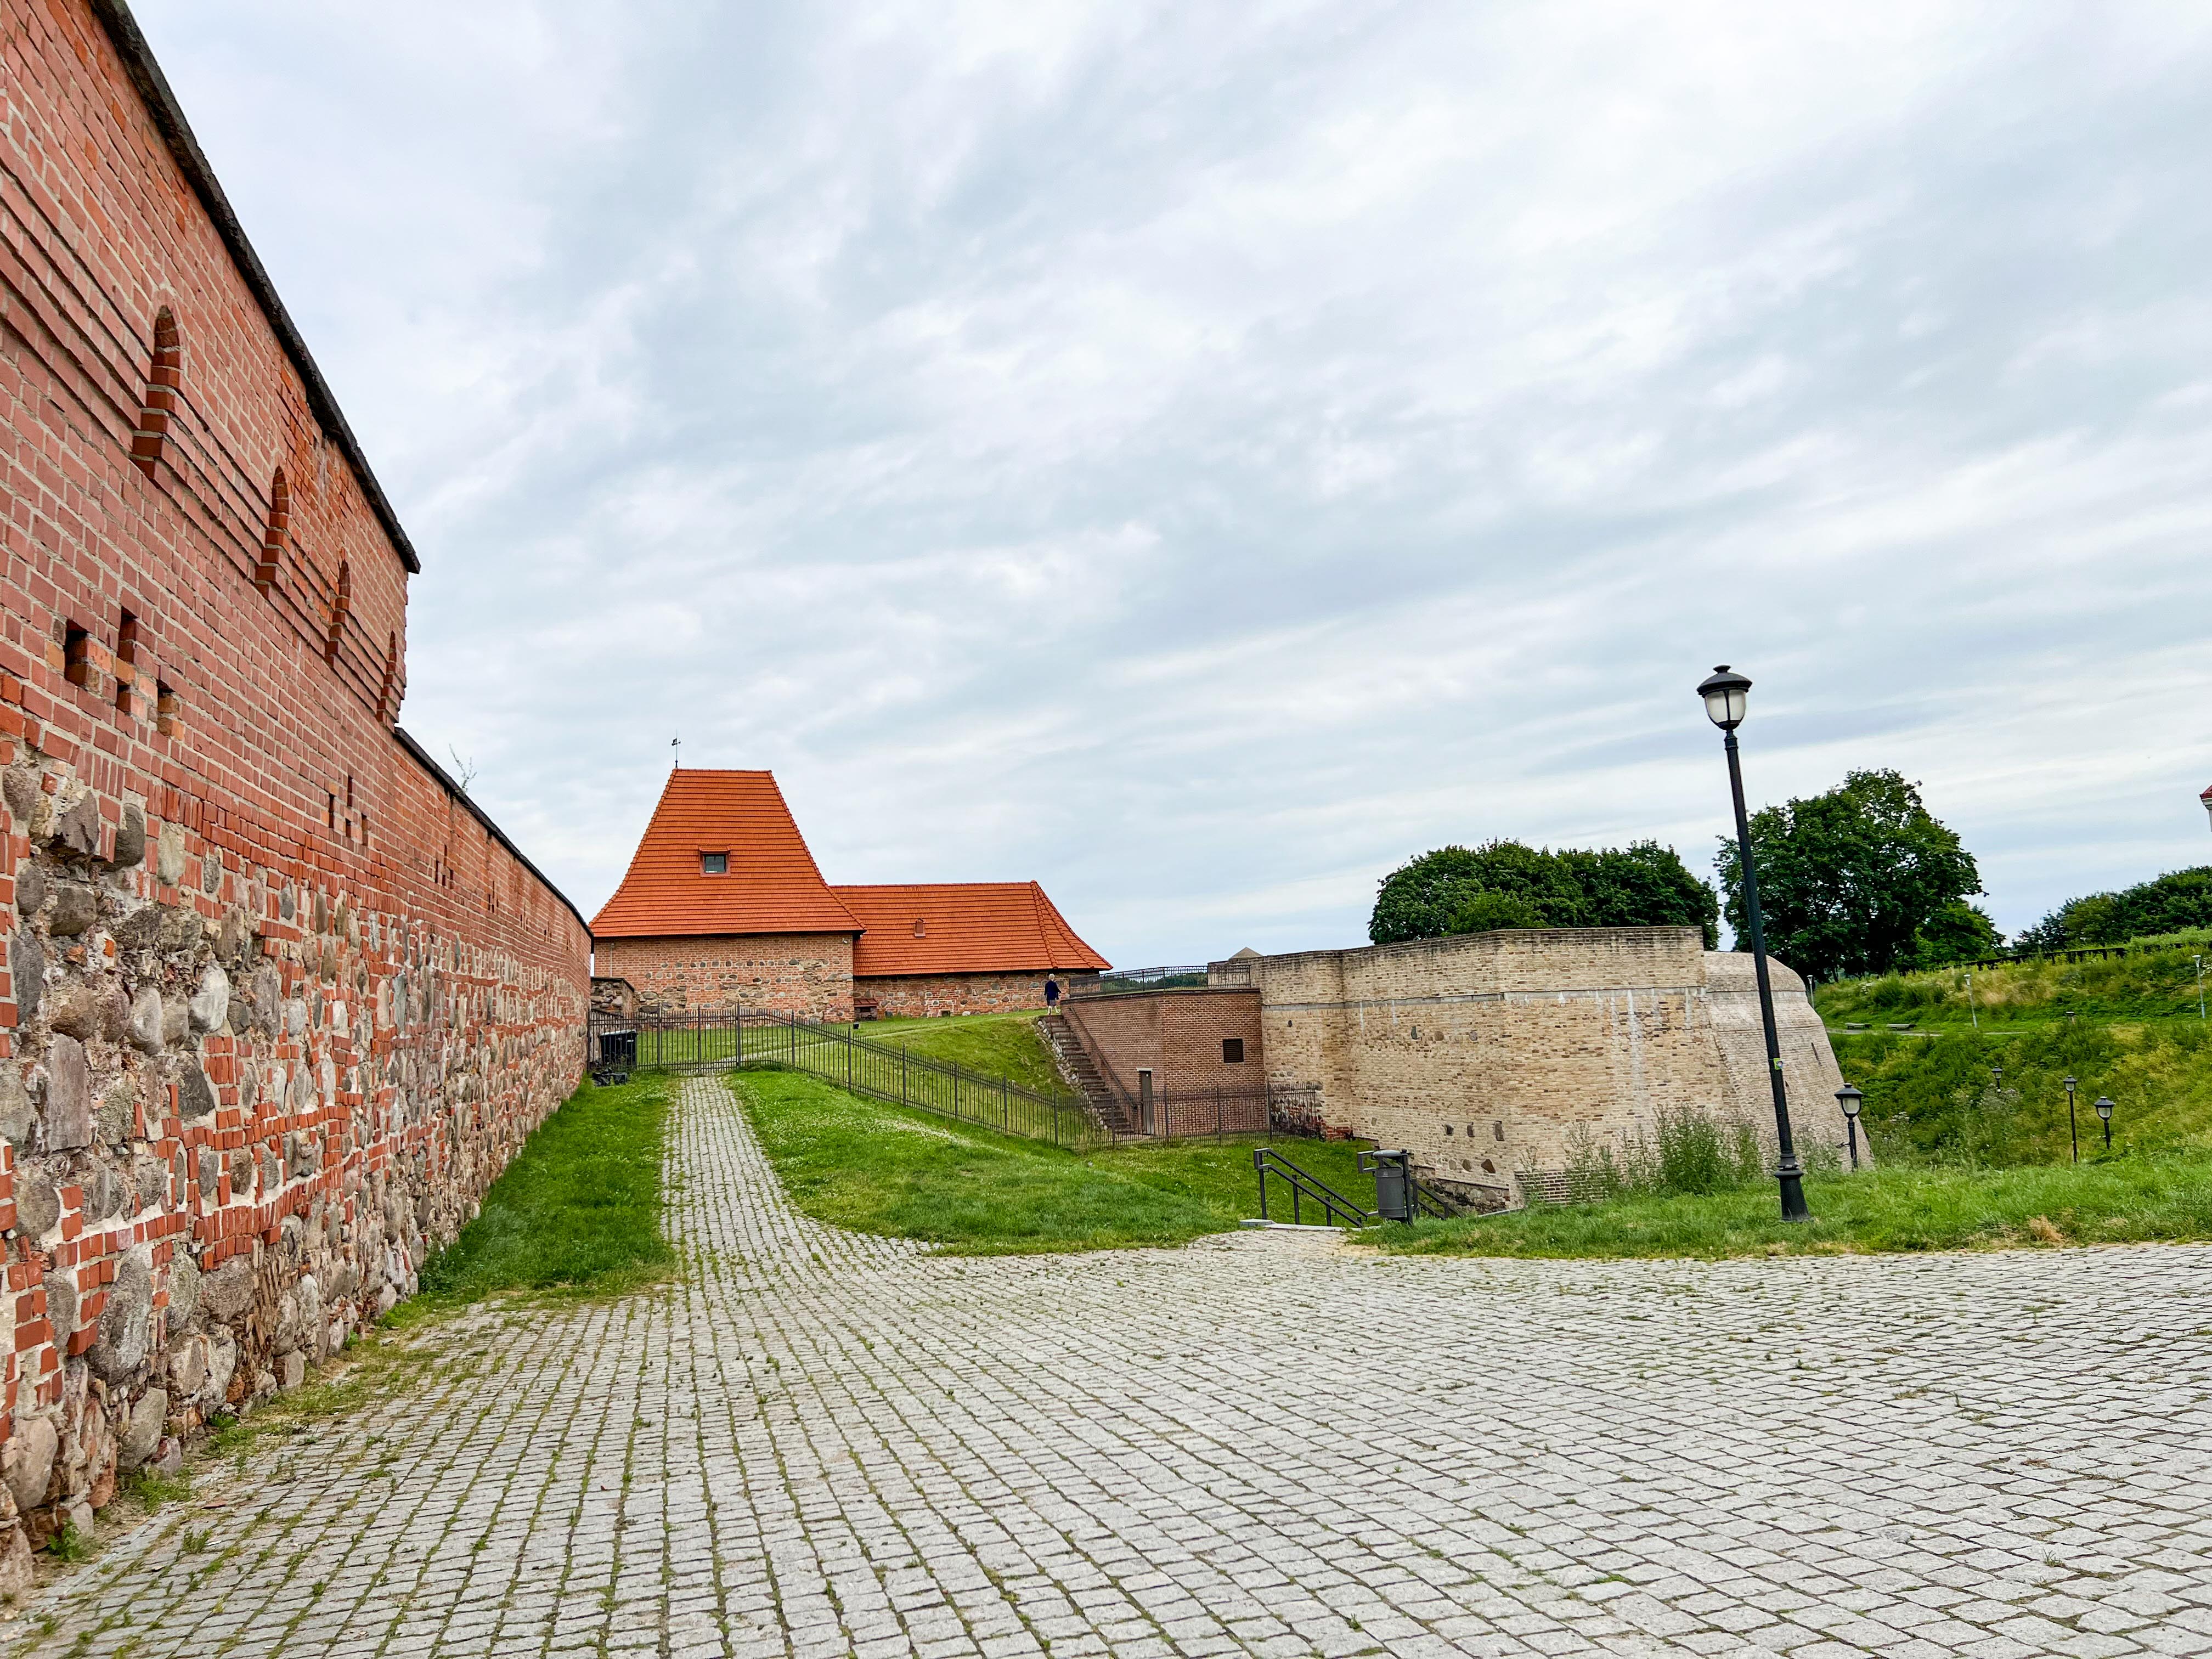 LISTA DE ATRATIVOS DE VILNIUS Bastion of the Vilnius Defensive Wall